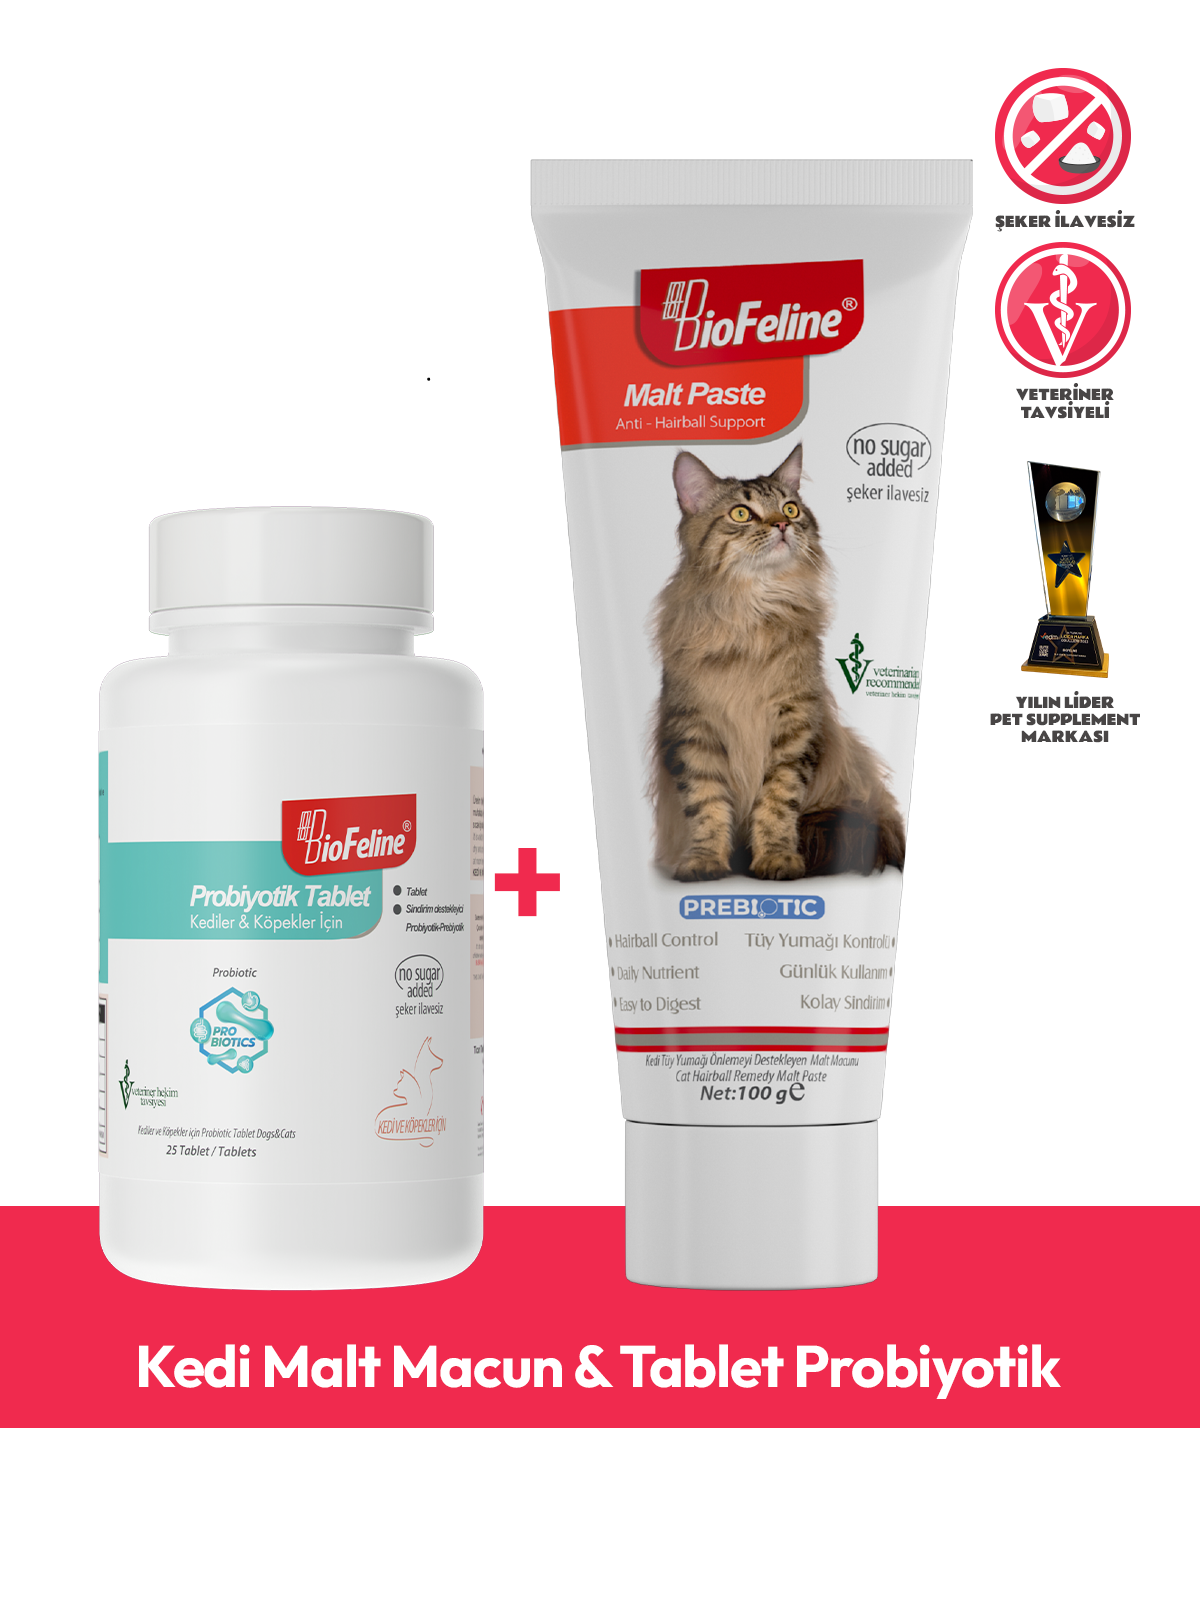 Kedi Malt Macun & Tablet Probiyotik